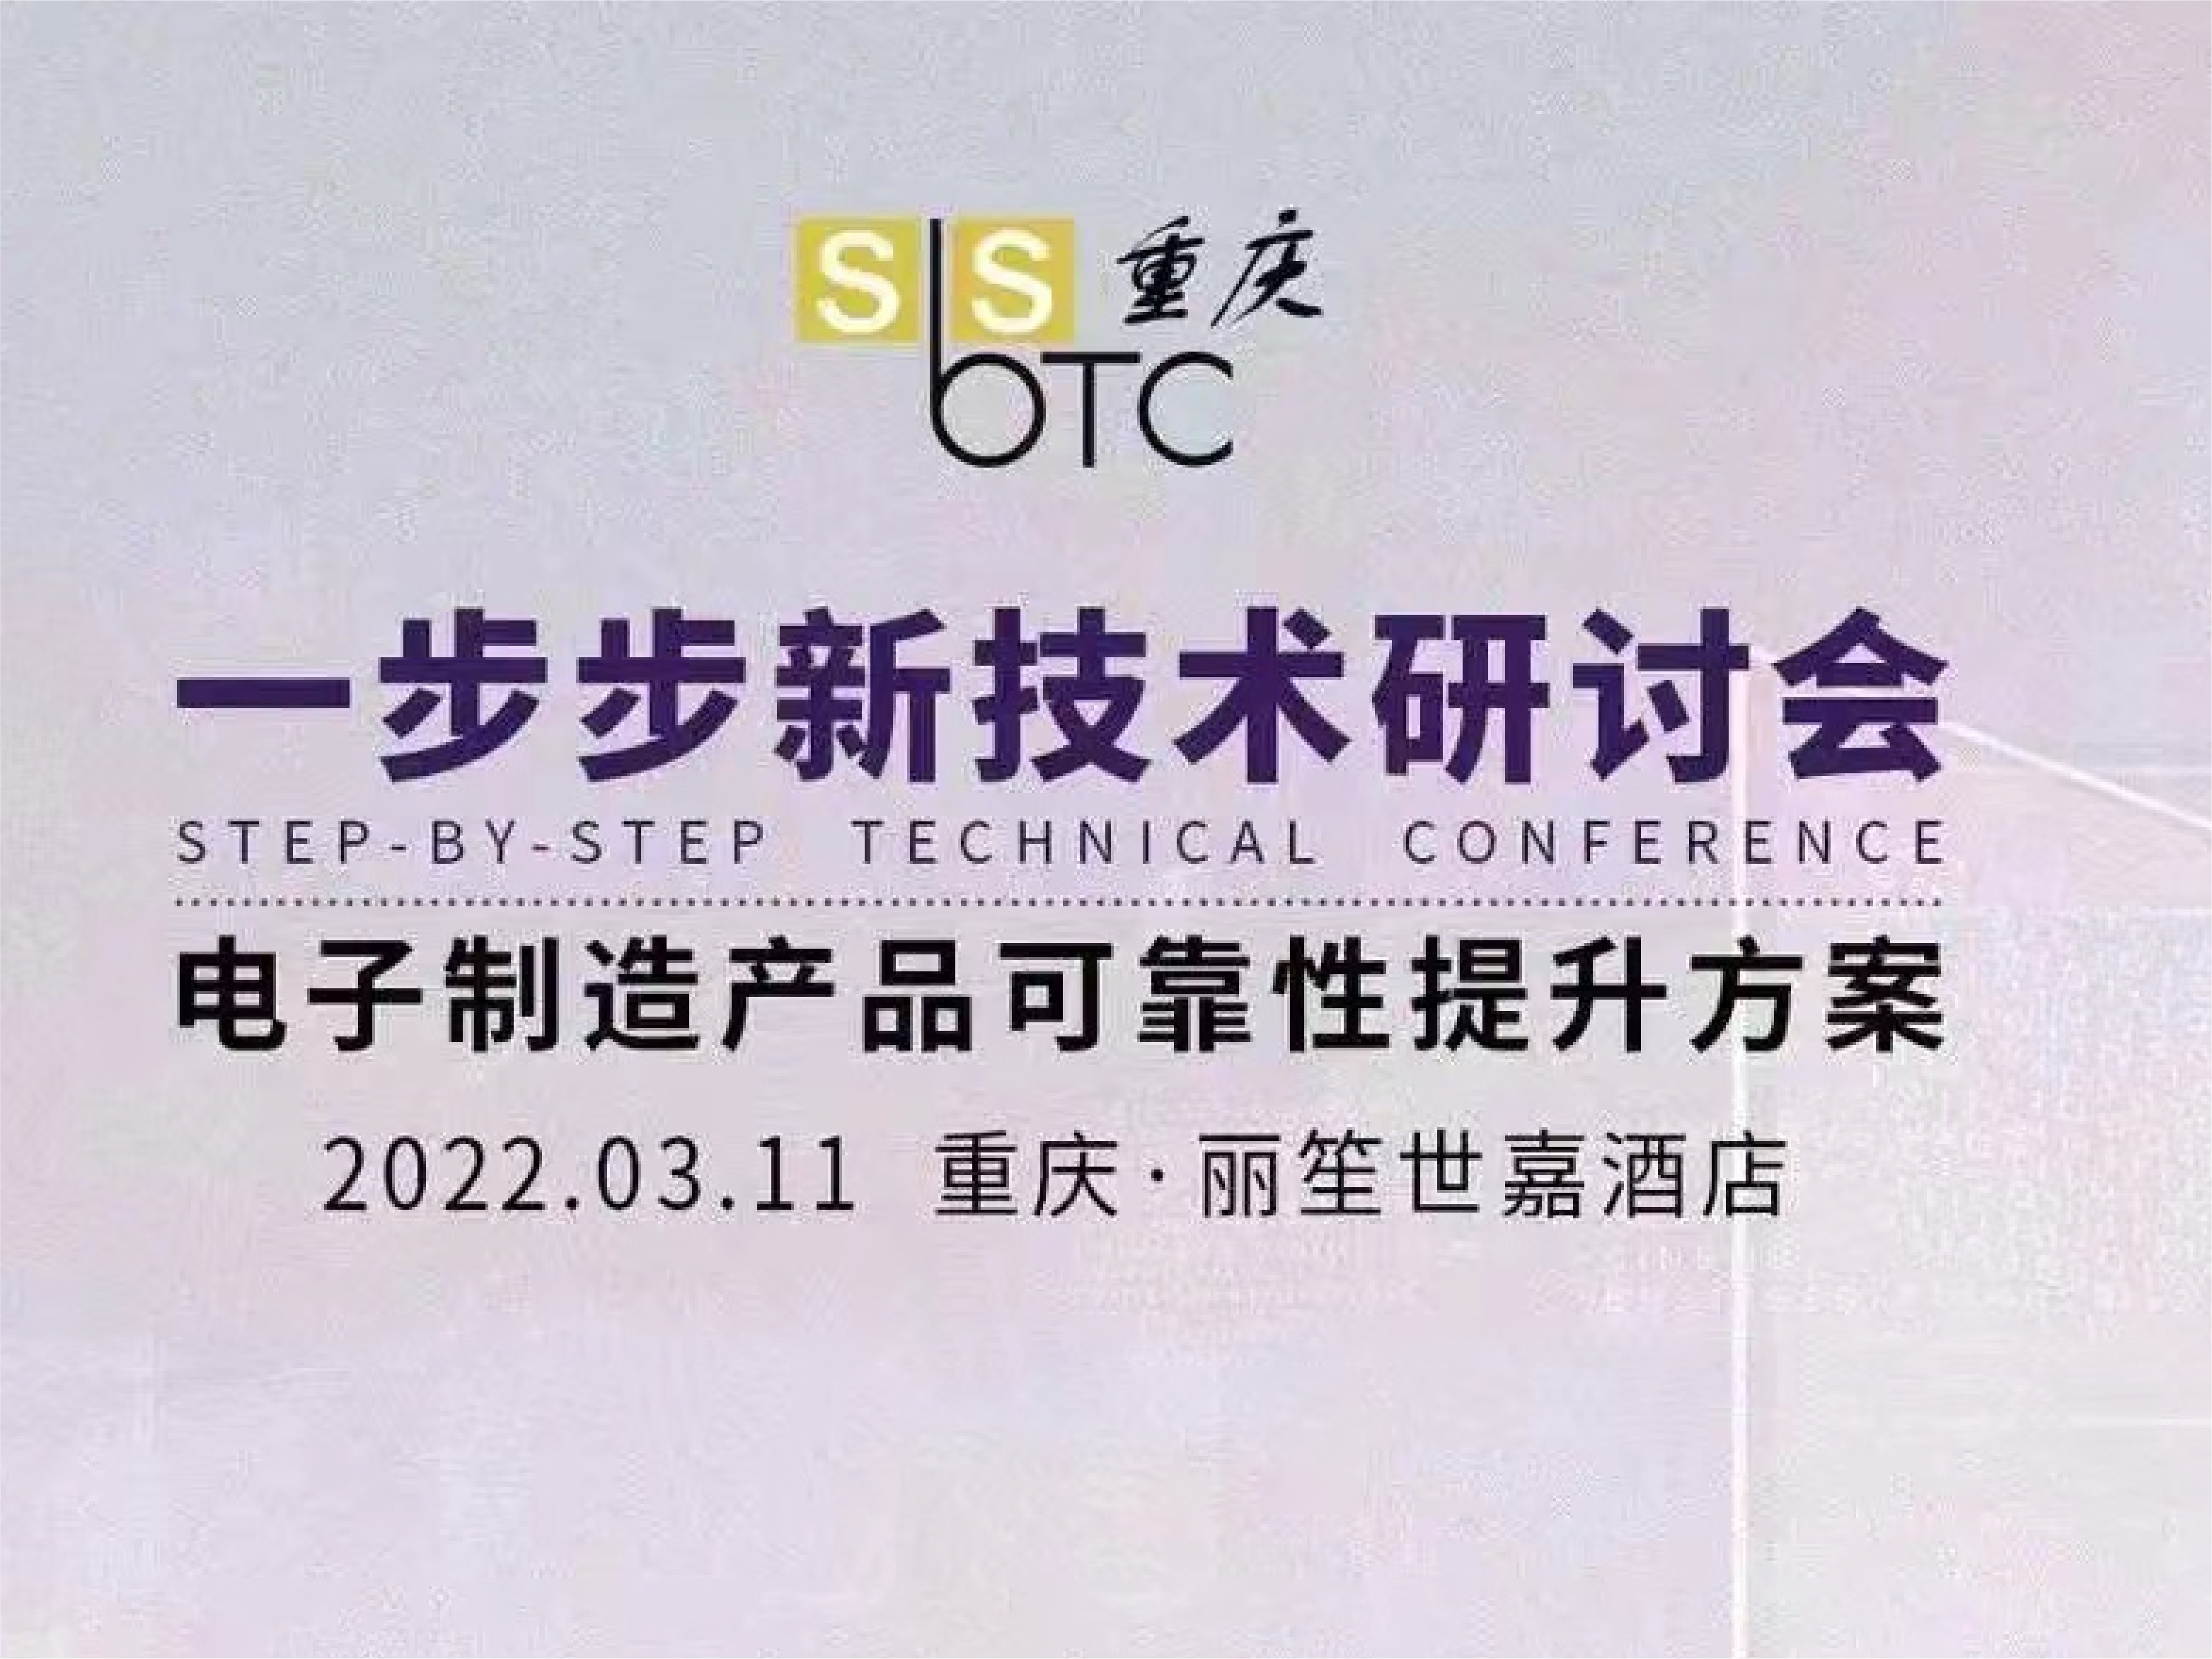 Future ATT, step by step new technology Chongqing Station seminar